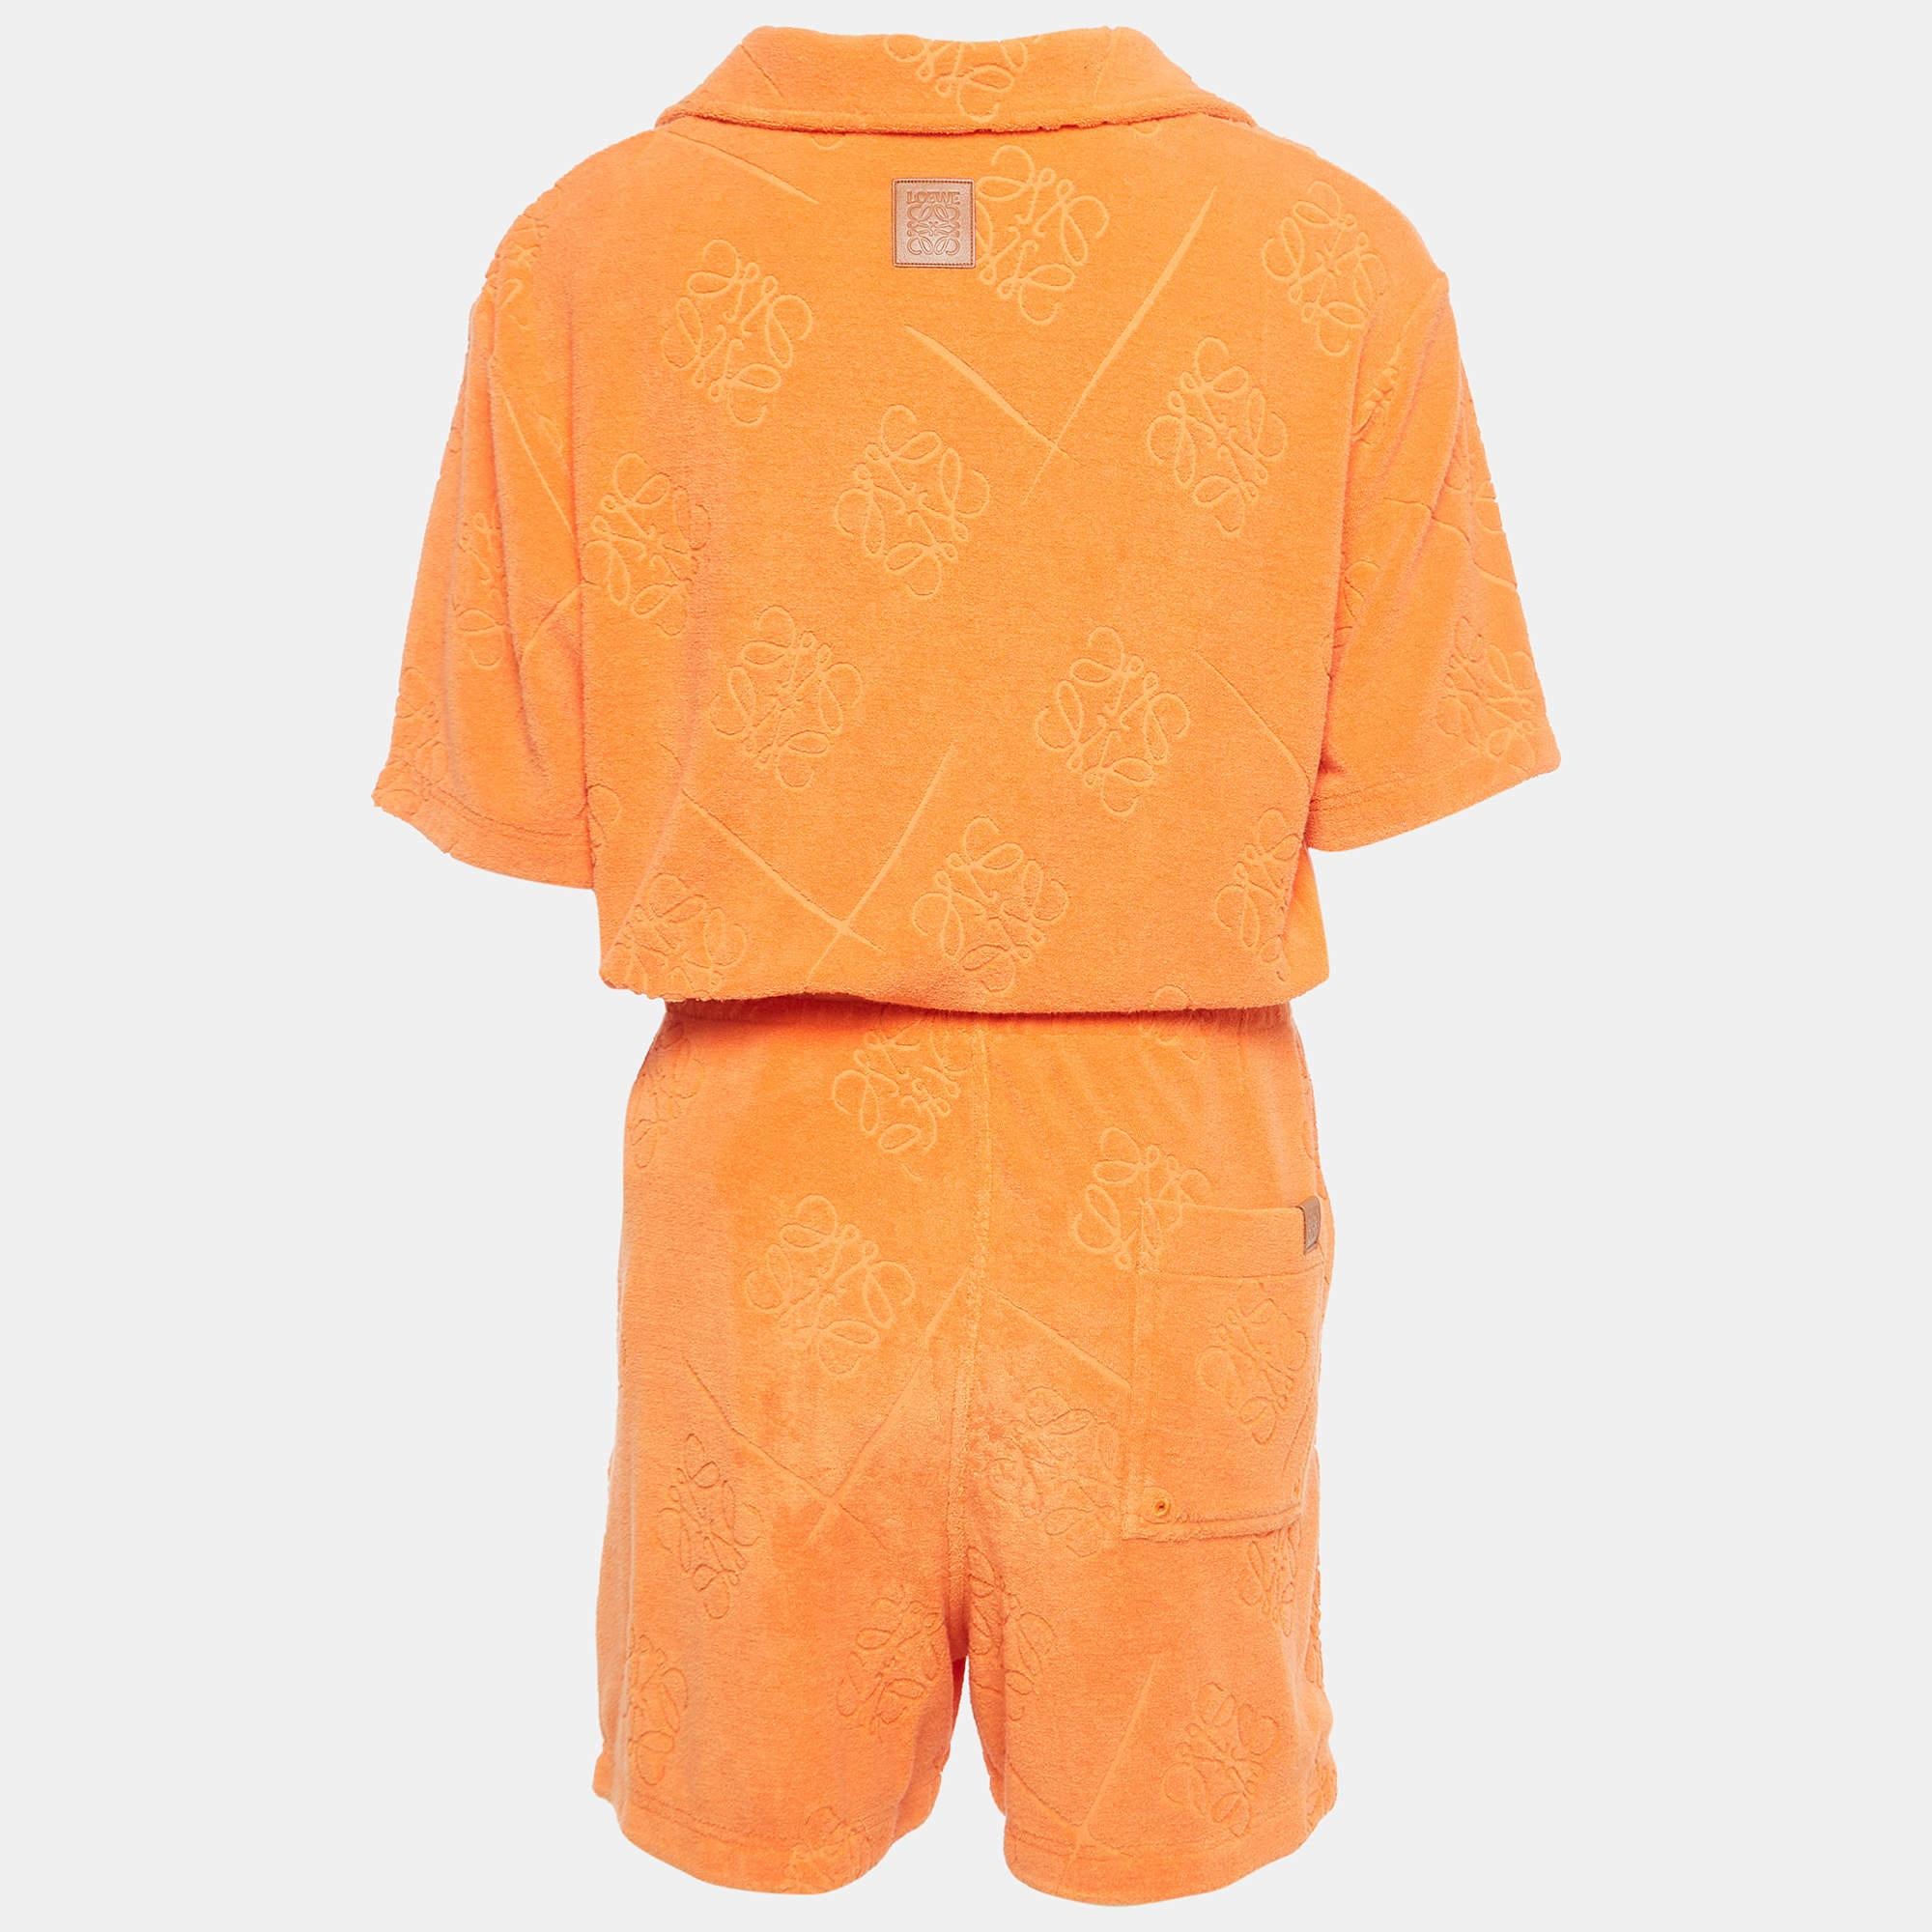 Loewe X Paula Ibiza Orange Anagram Terry Cotton Shirt & Shorts Set M In Good Condition For Sale In Dubai, Al Qouz 2